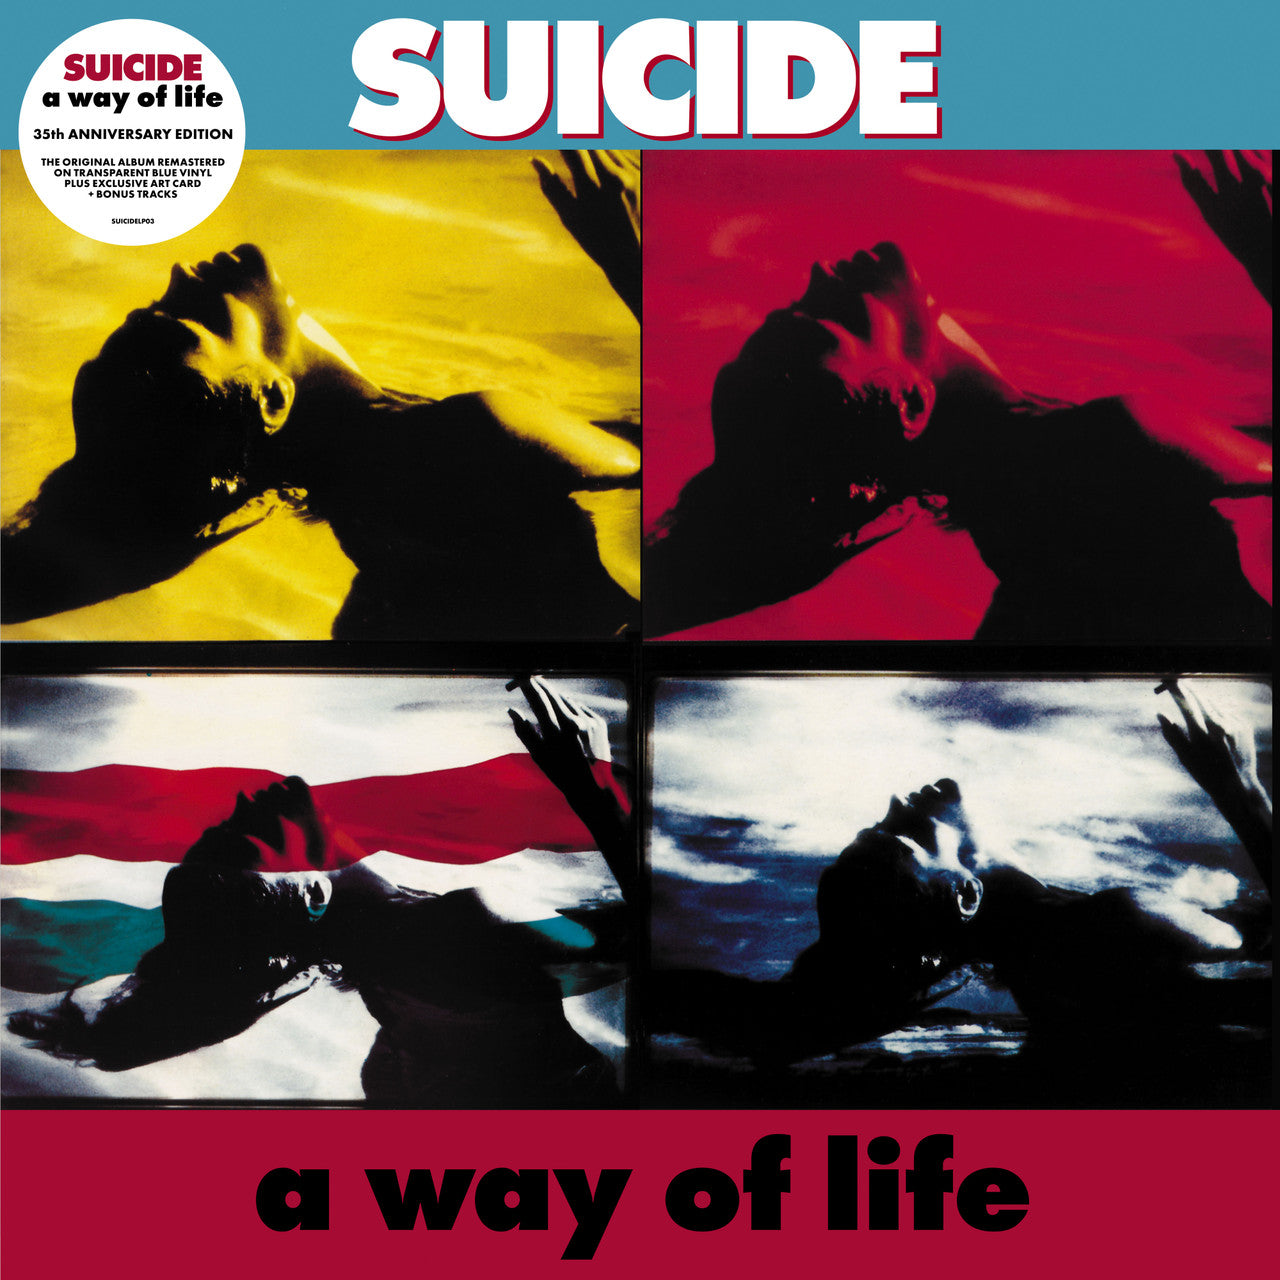 SUICIDE - A WAY OF LIFE - 35TH ANNIVERSARY EDITION - VINYL LP